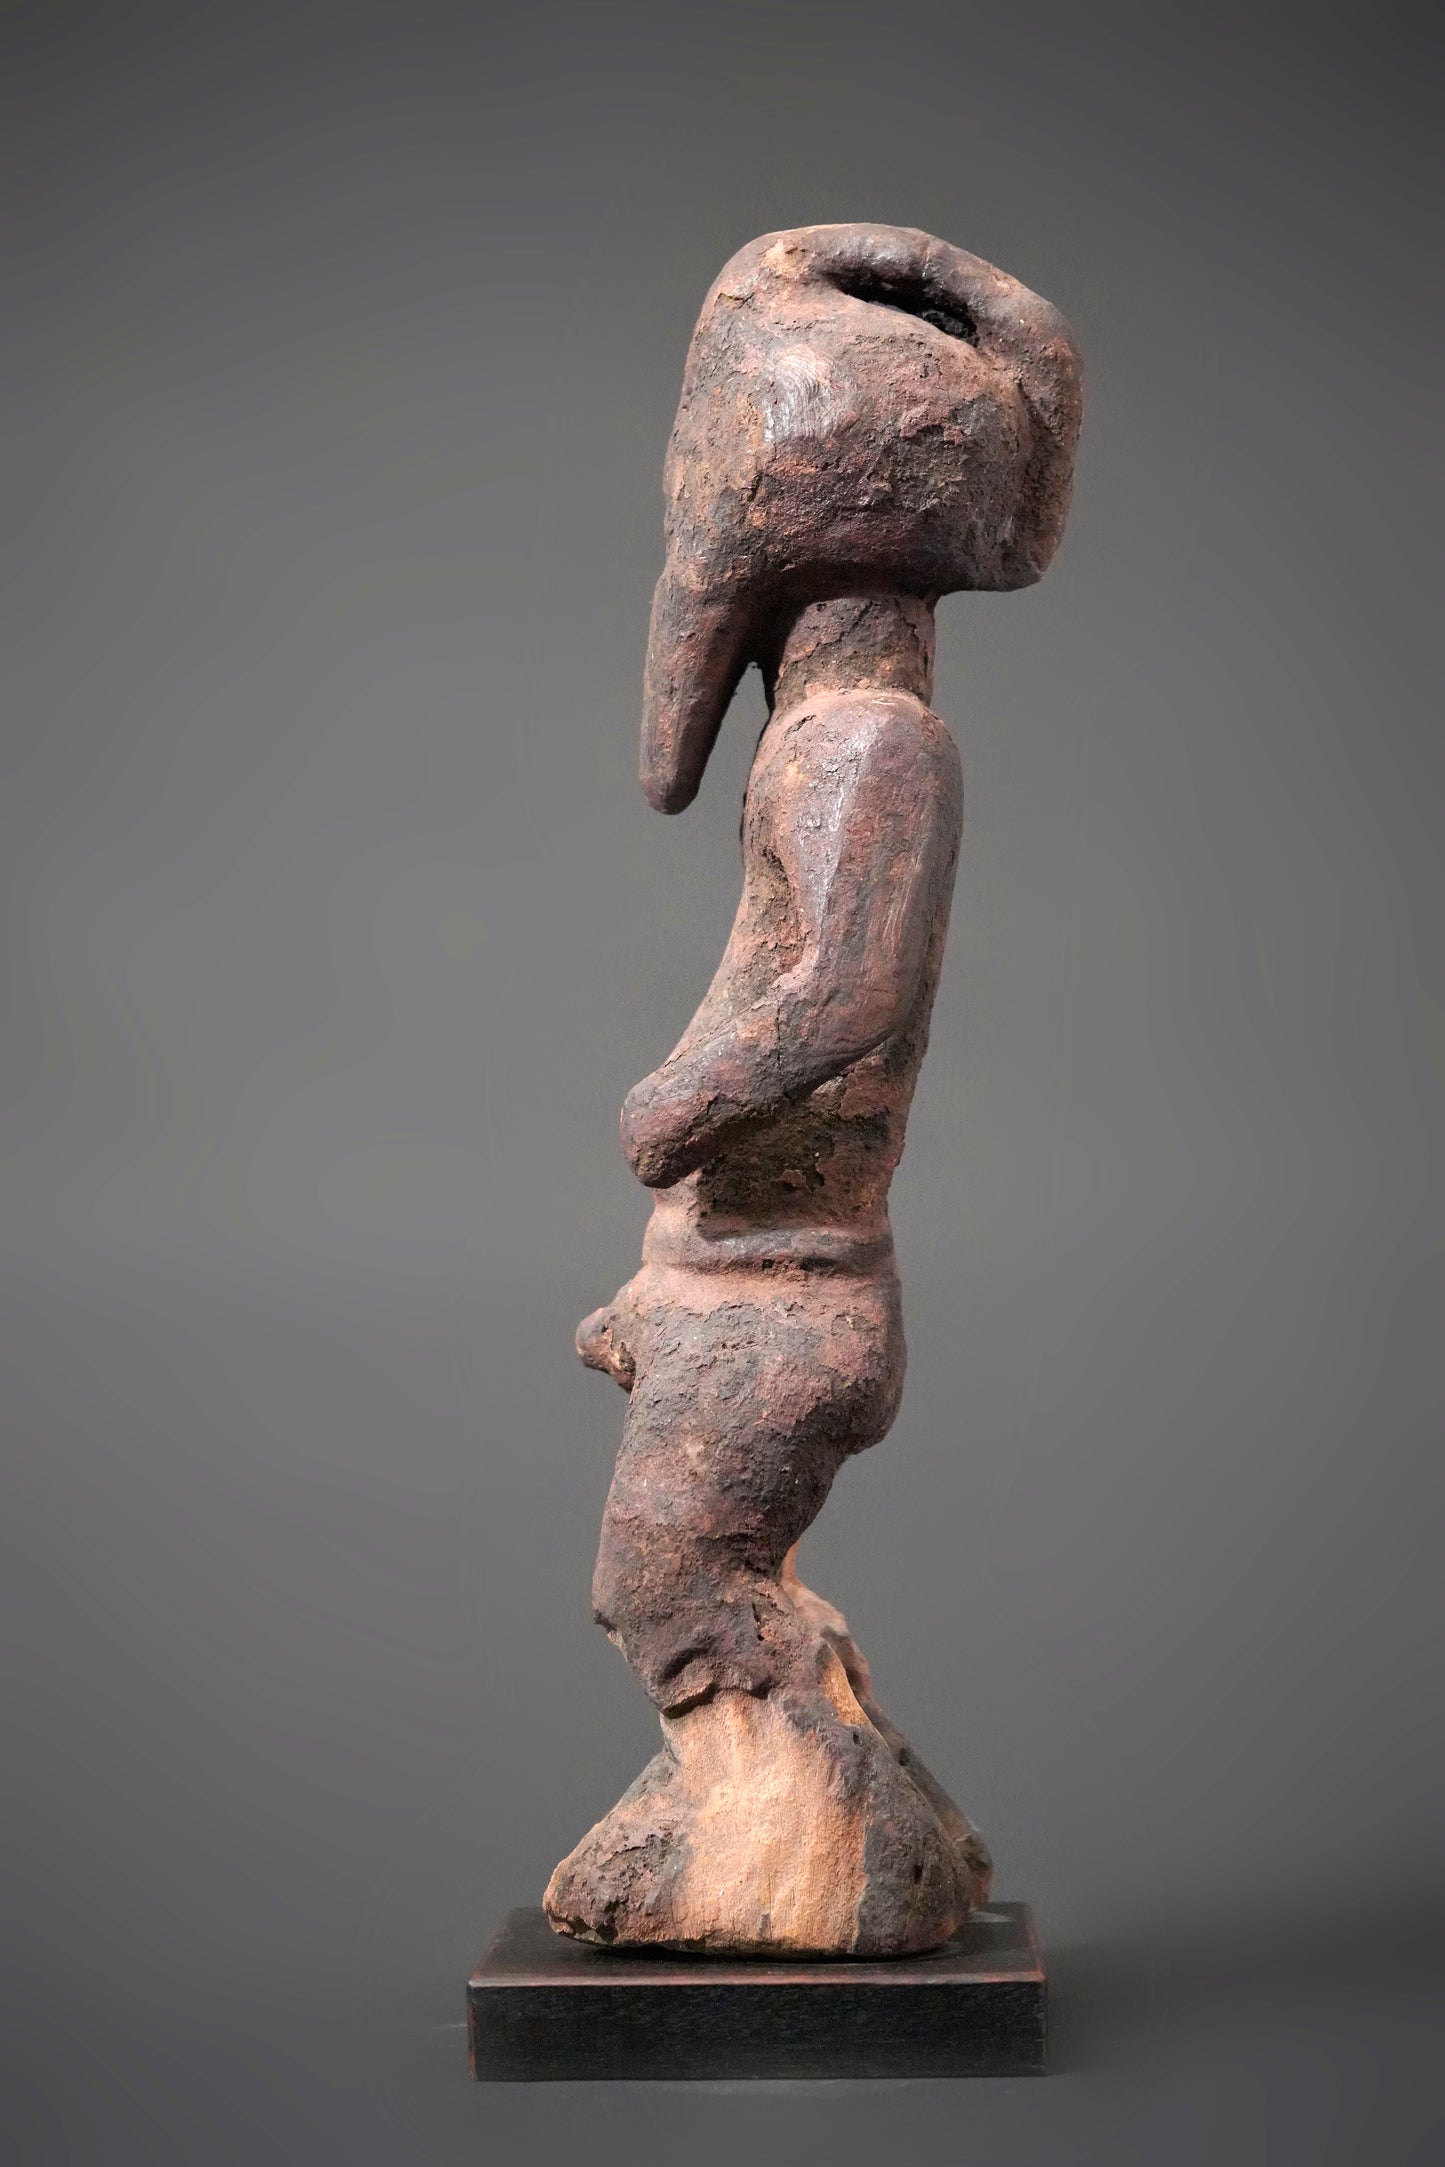 A male Keaka sculpture